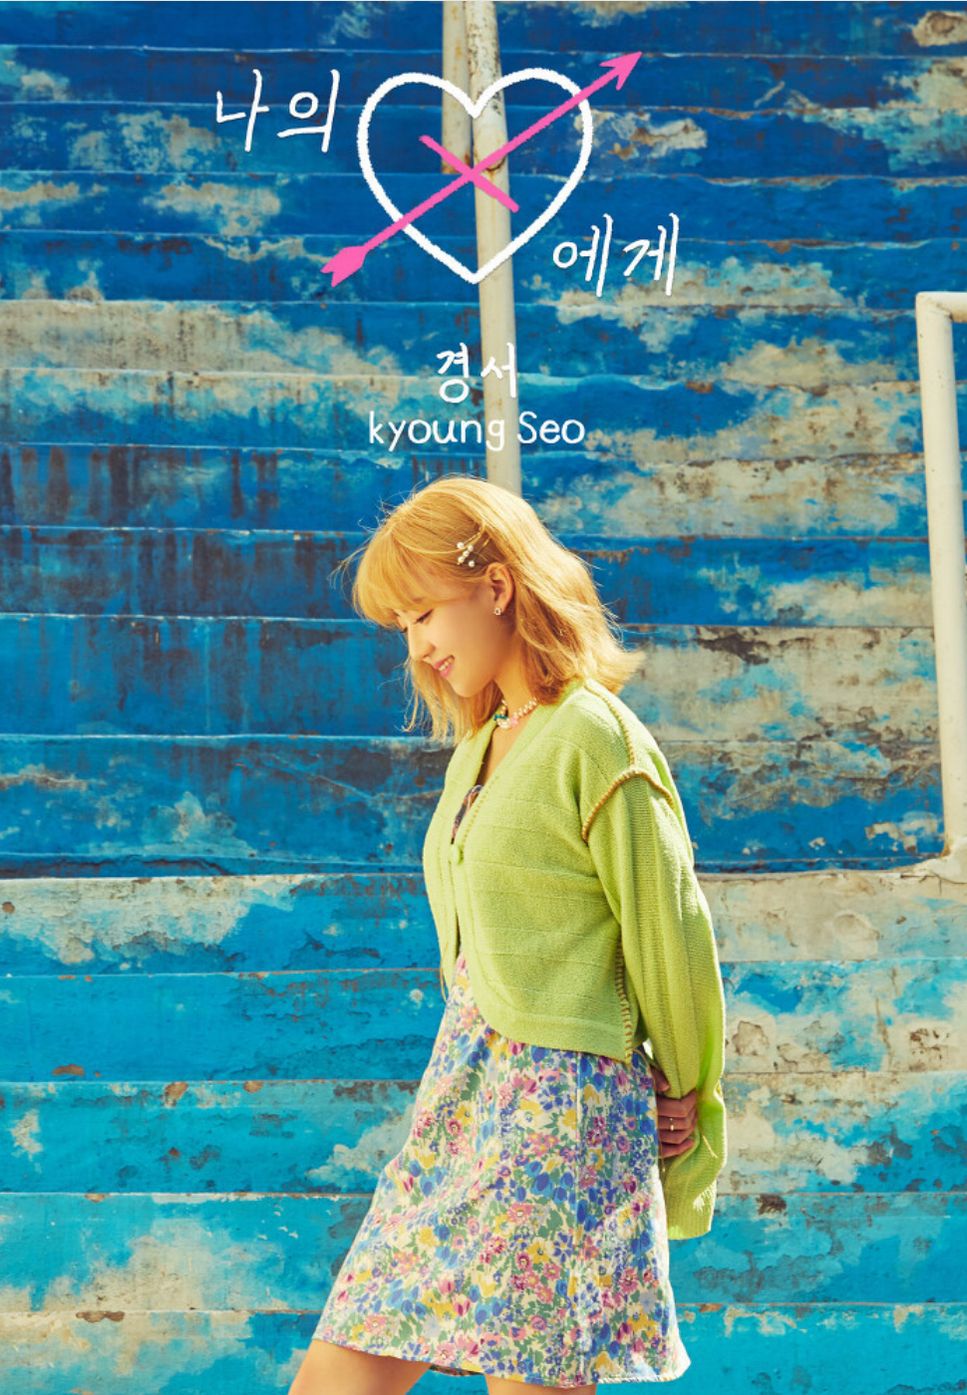 KyoungSeo(경서) - Dear my X(나의 X에게) by PIANOSUMM